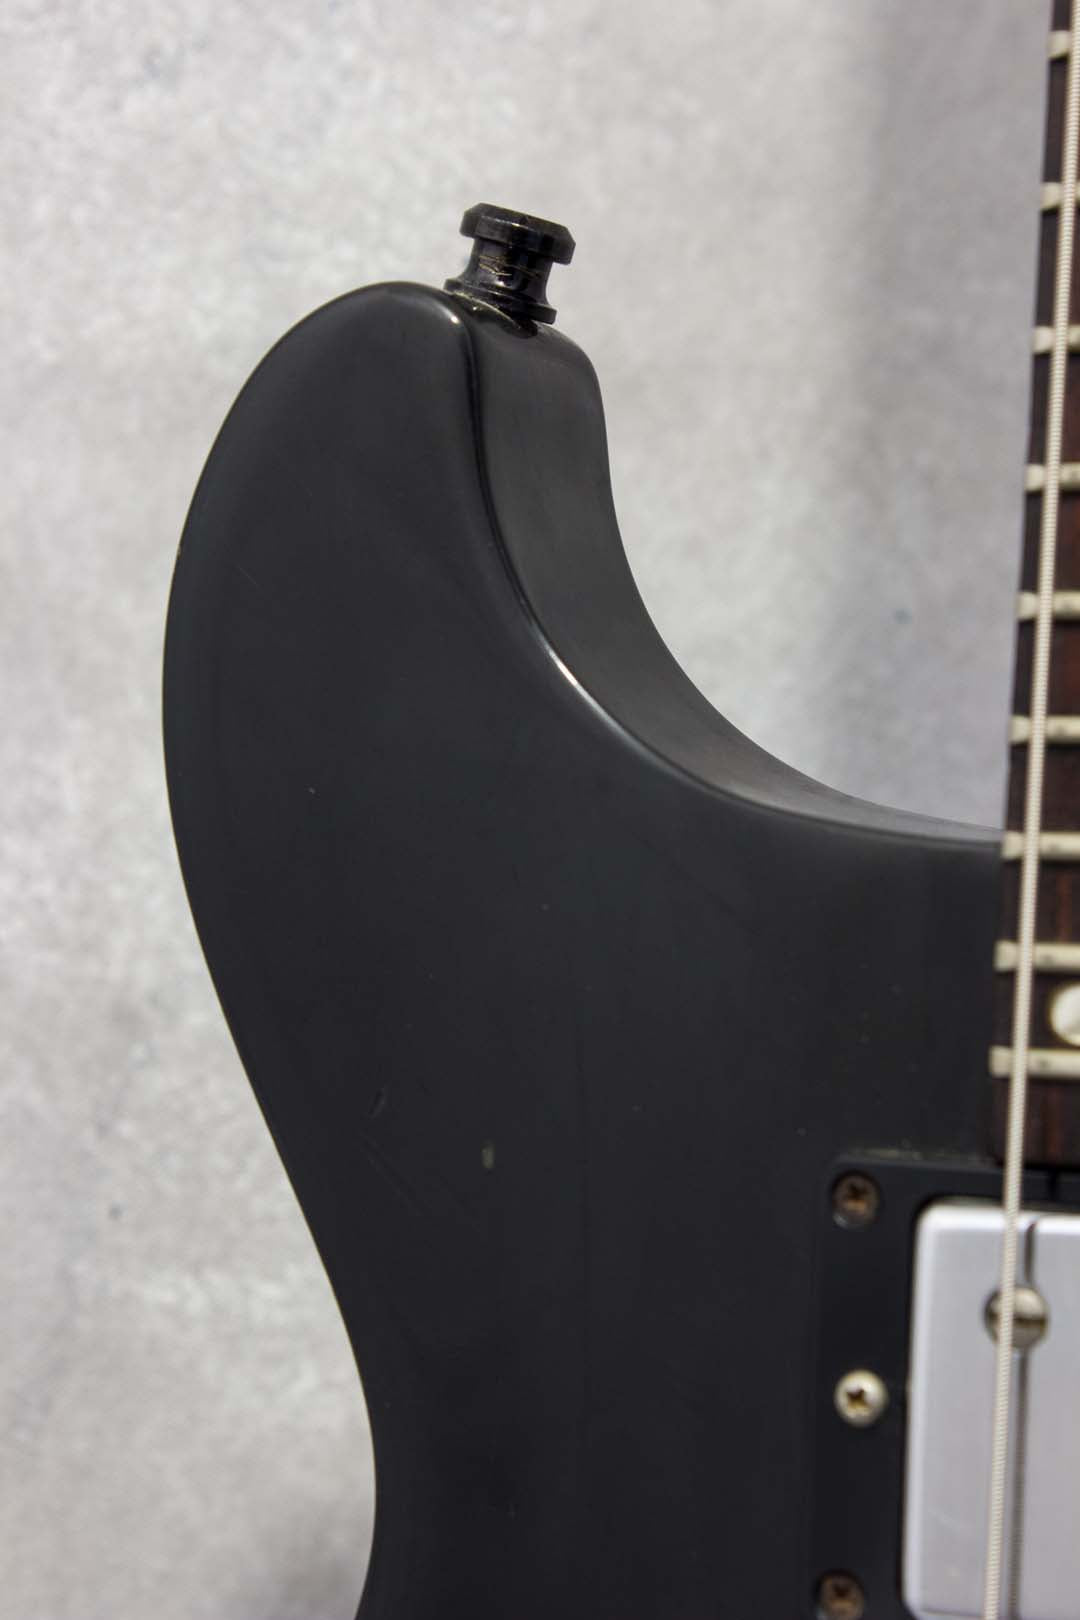 Gibson Les Paul Studio Double Cut Black 1997 – Topshelf Instruments